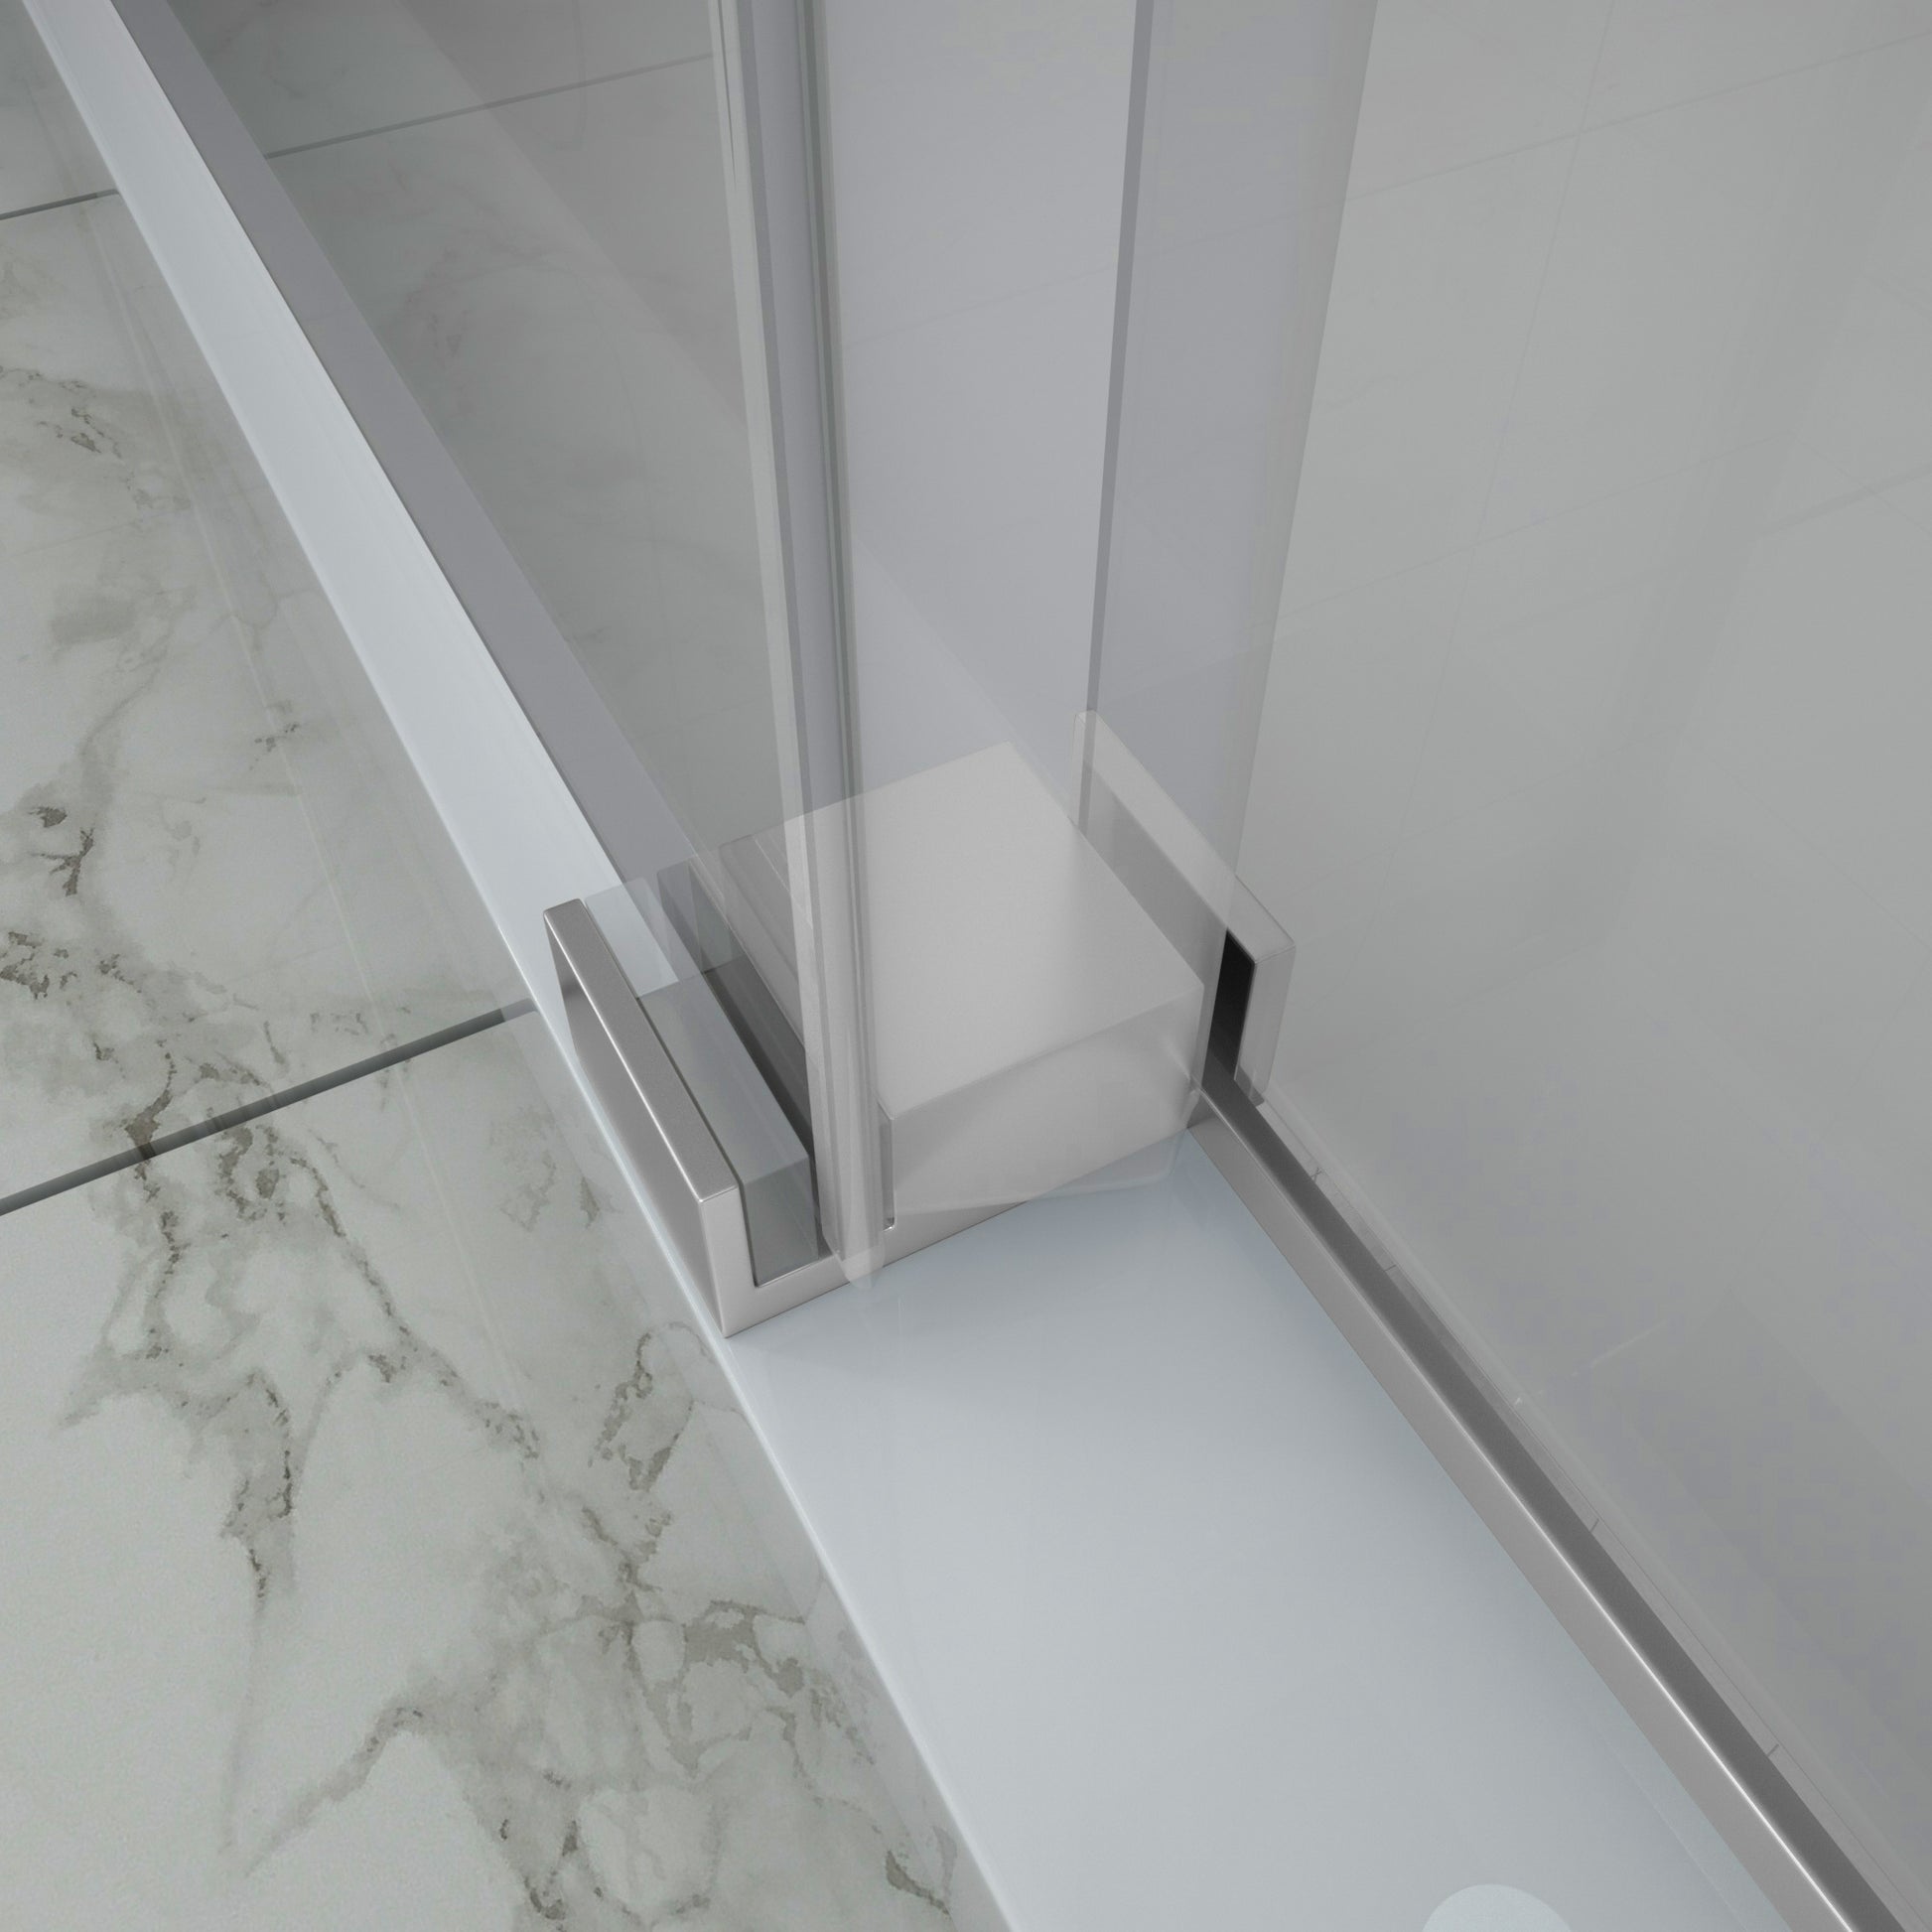 Shower Door 48" W x 76"H Single Sliding Bypass Shower chrome-glass